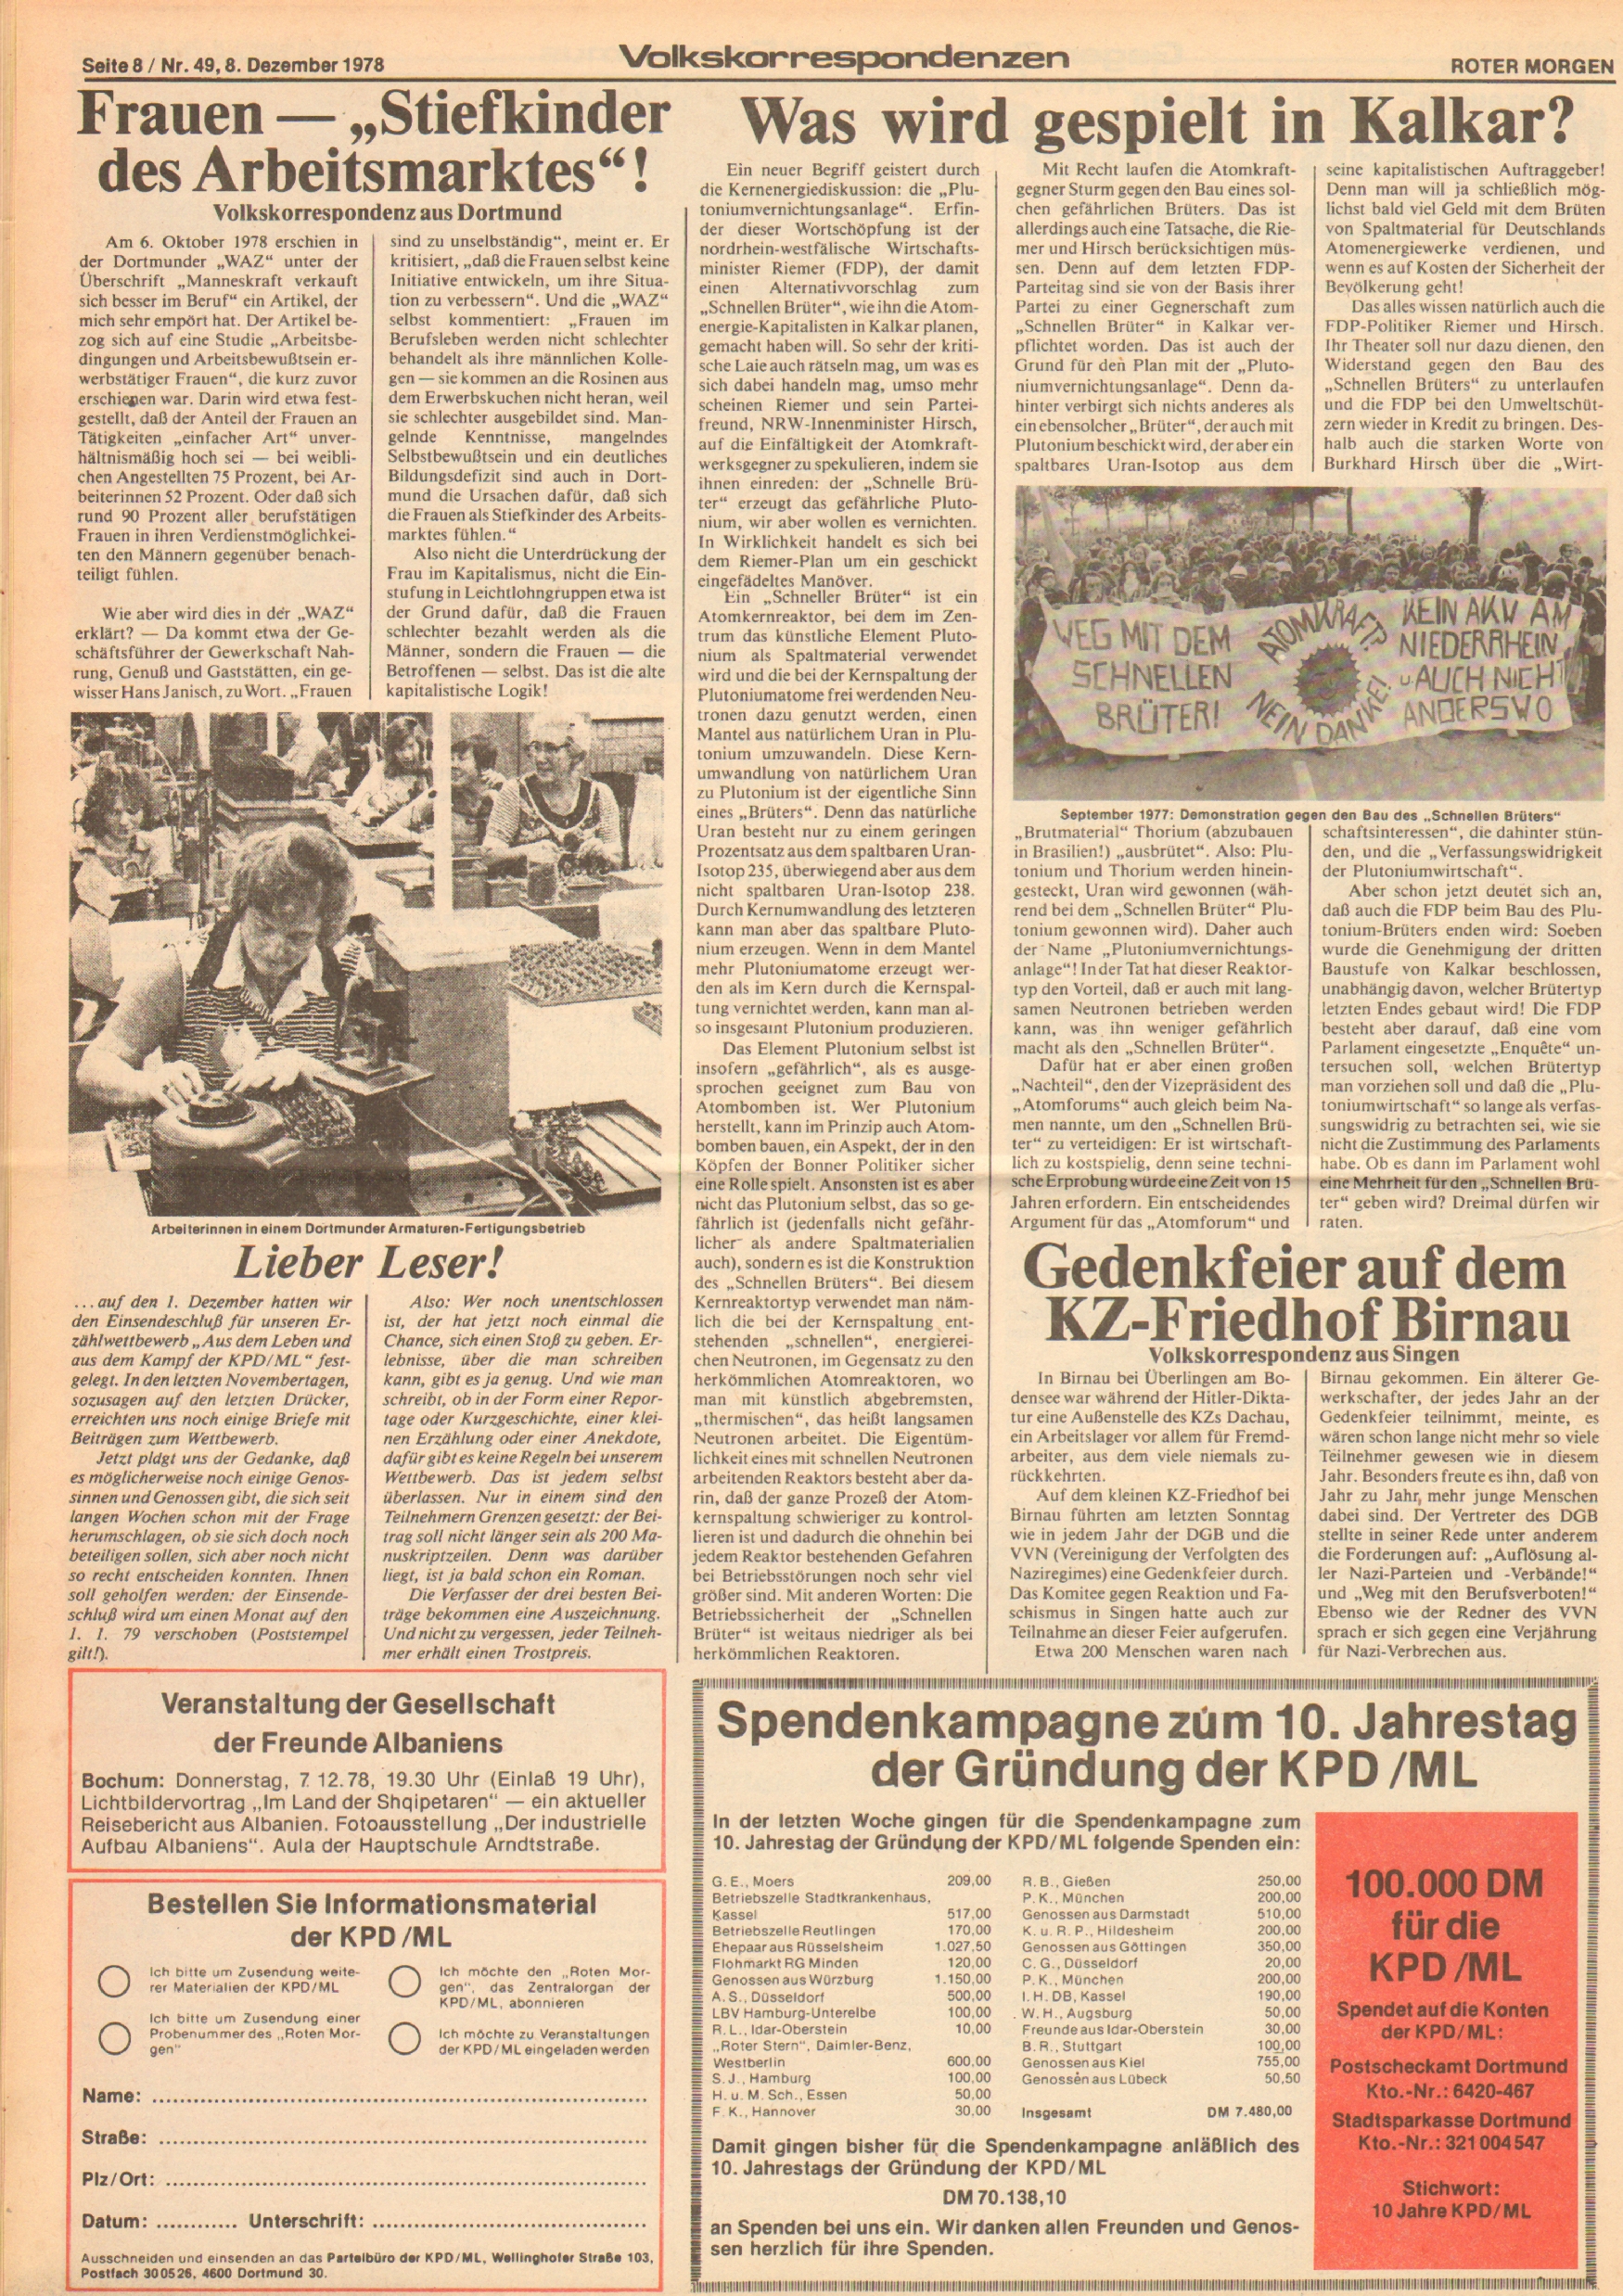 Roter Morgen, 12. Jg., 8. Dezember 1978, Nr. 49, Seite 8